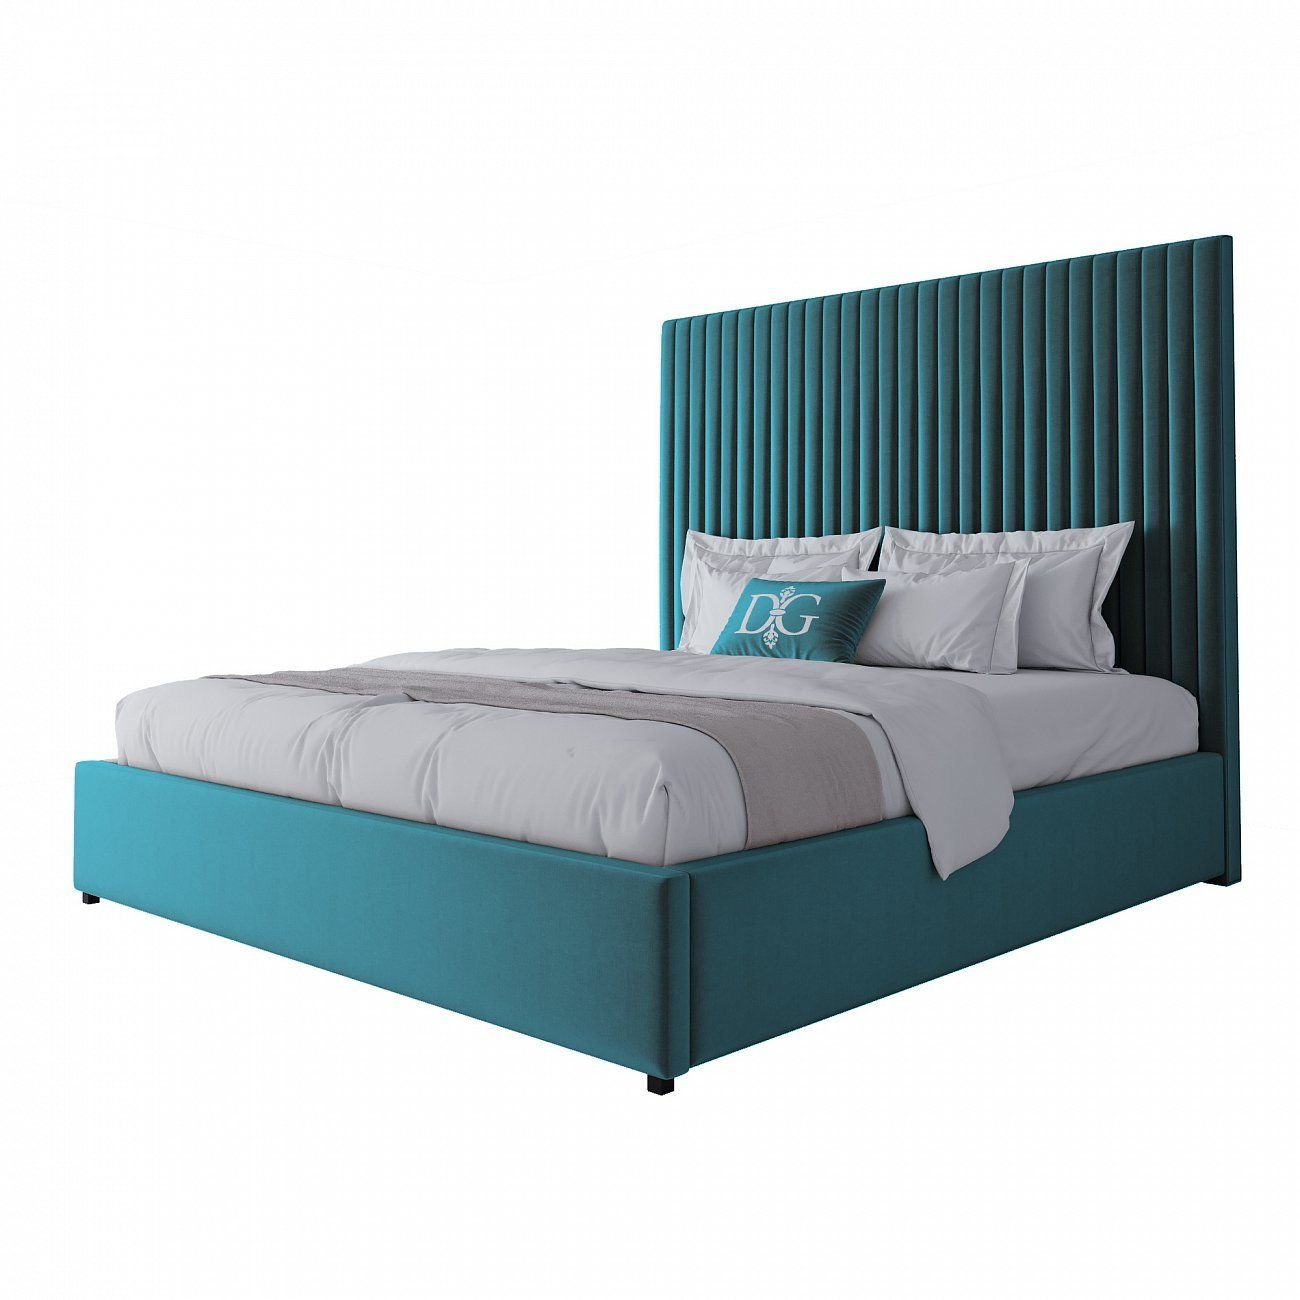 Double bed 180x200 cm sea wave Mora P